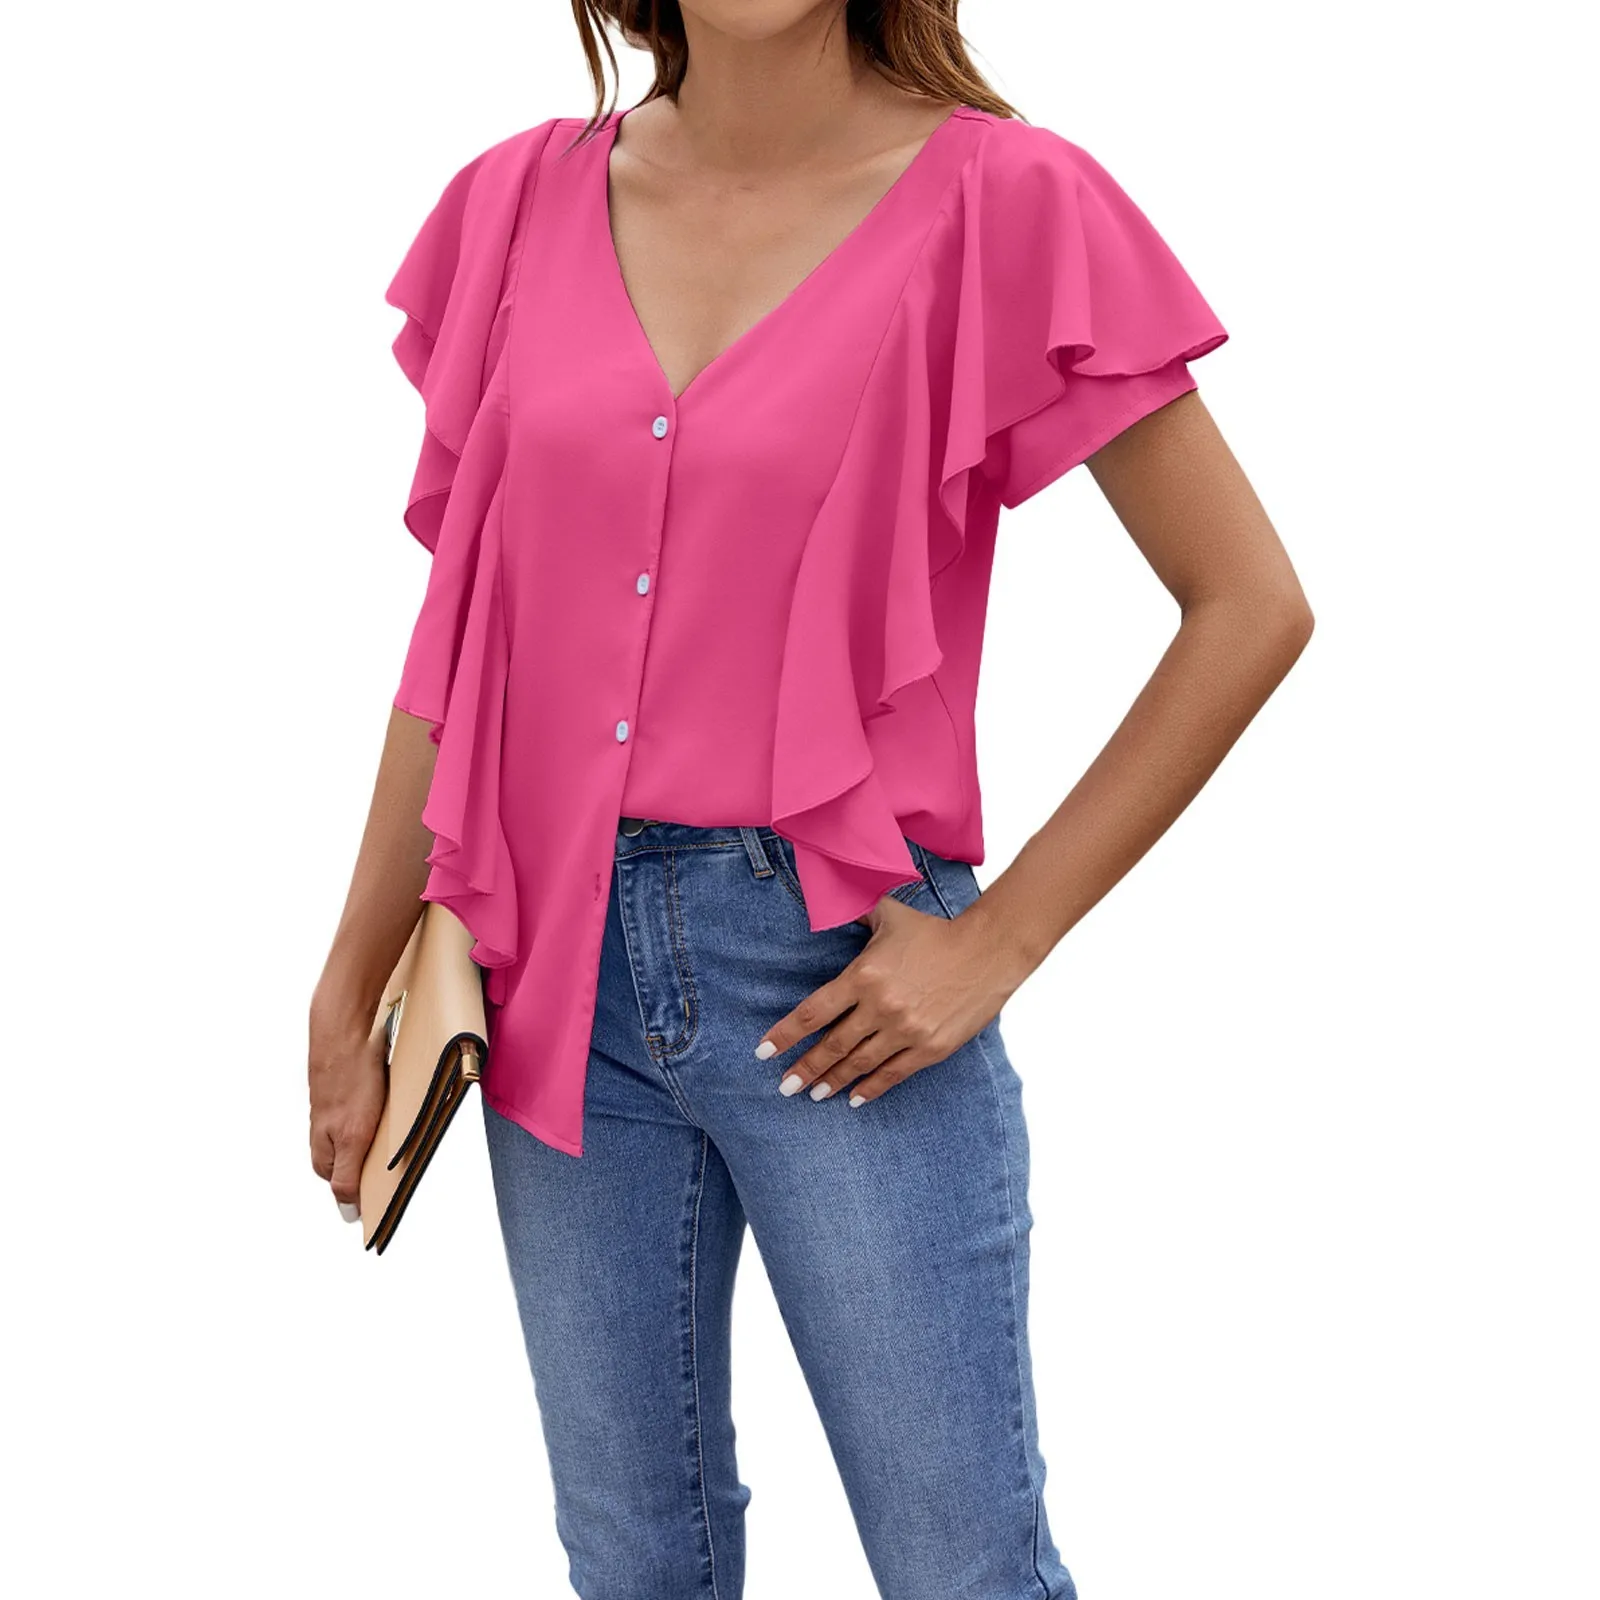 

Women's Fashion Summer Flying Edge Ruffle Sleeve V-neck Shirt Single Breasted Top más tamaño tops Топы больших размеров koszulki